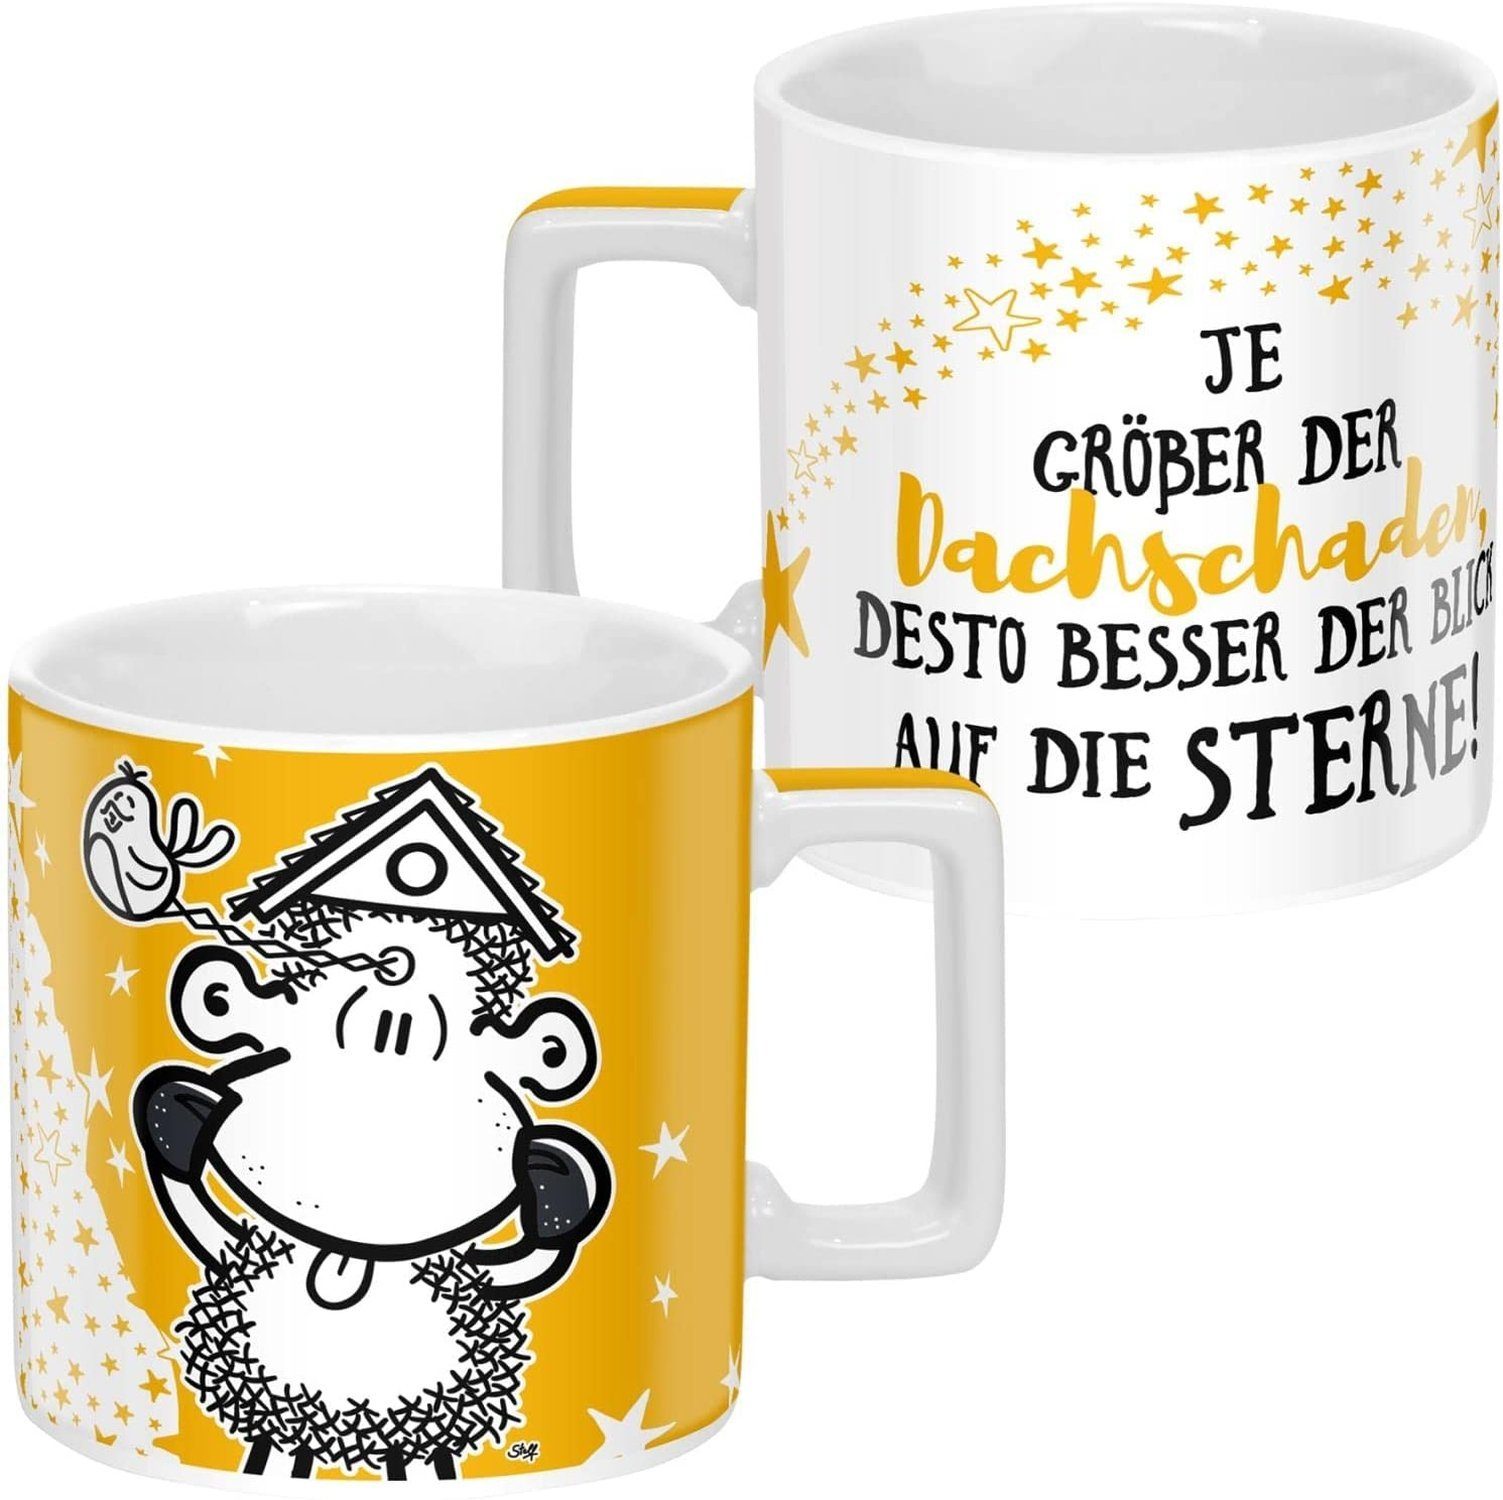 Sheepworld Tasse Kaffeetasse Kaffeebecher 45cl, Material: Sheepworld Porzellan 47768 Wortheld-Tasse Teetasse Sterne